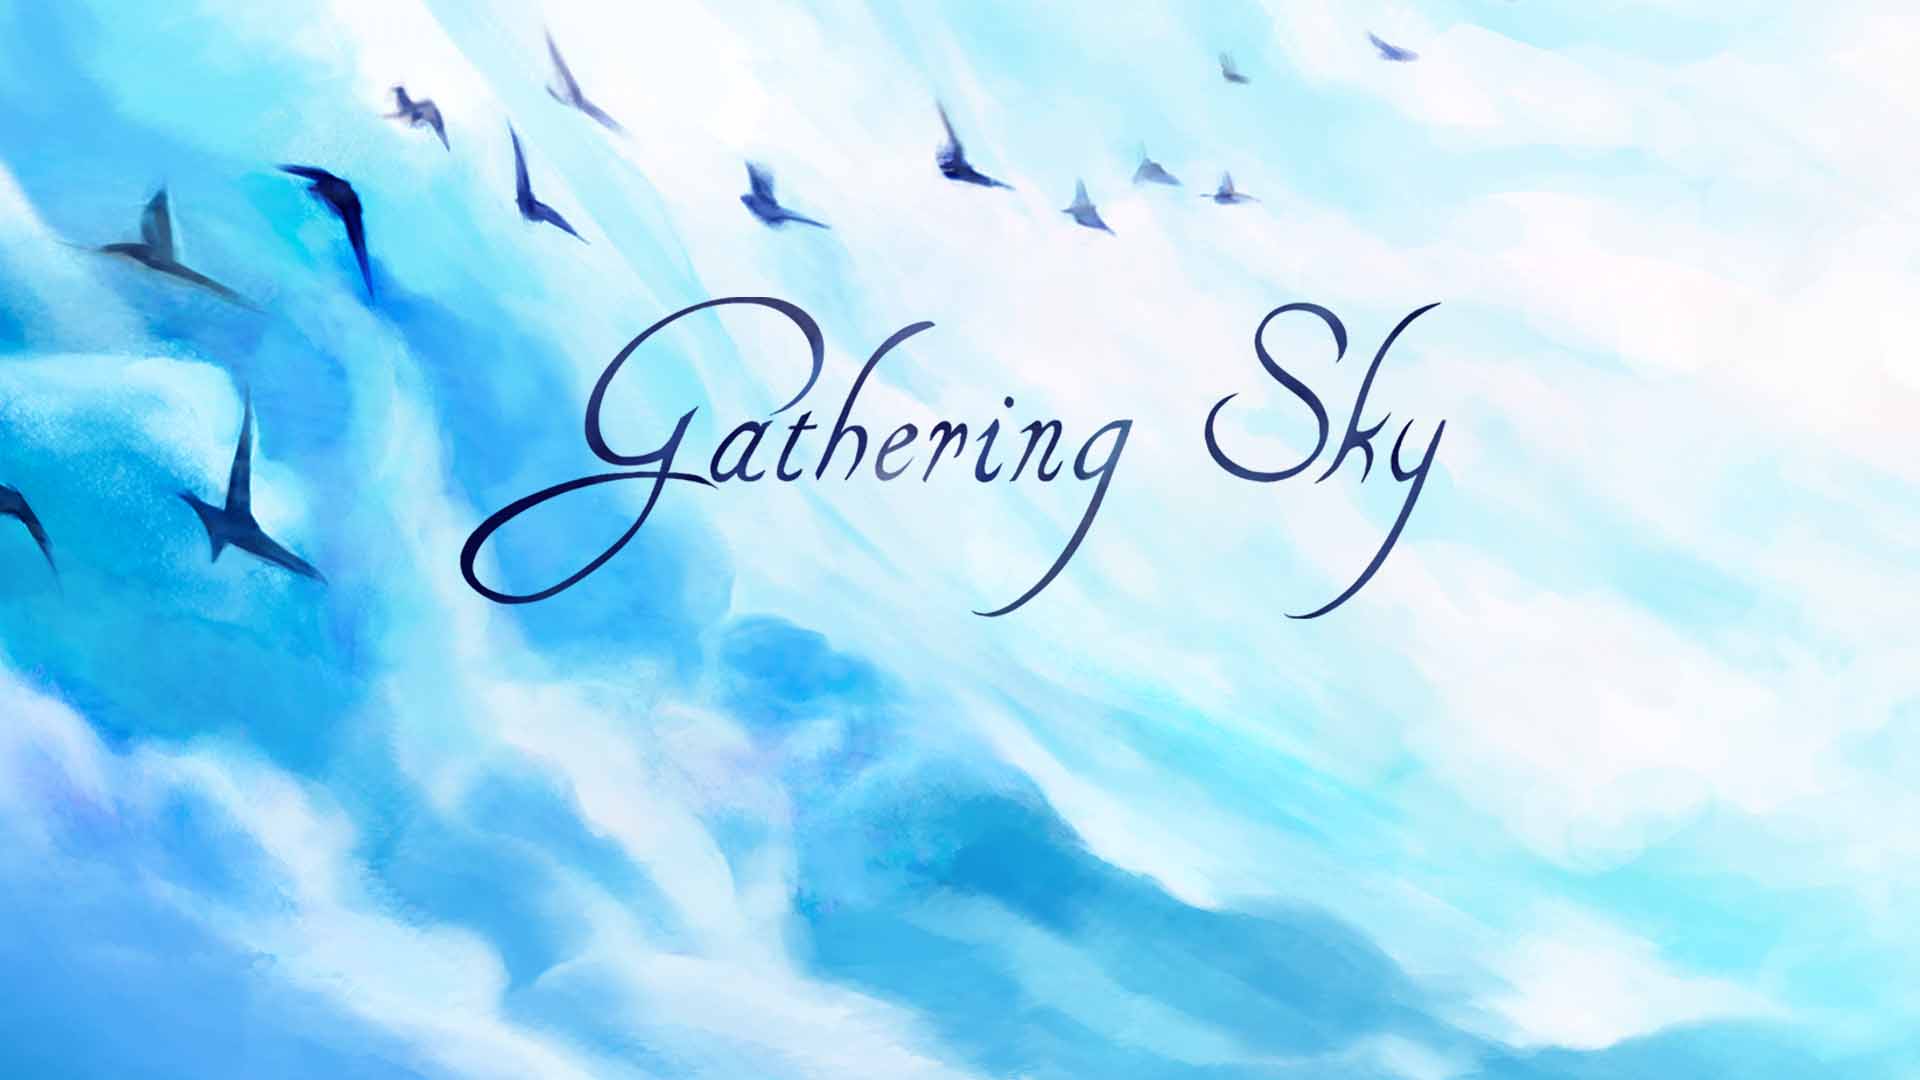 Gathering Sky - Original Soundtrack Featured Screenshot #1